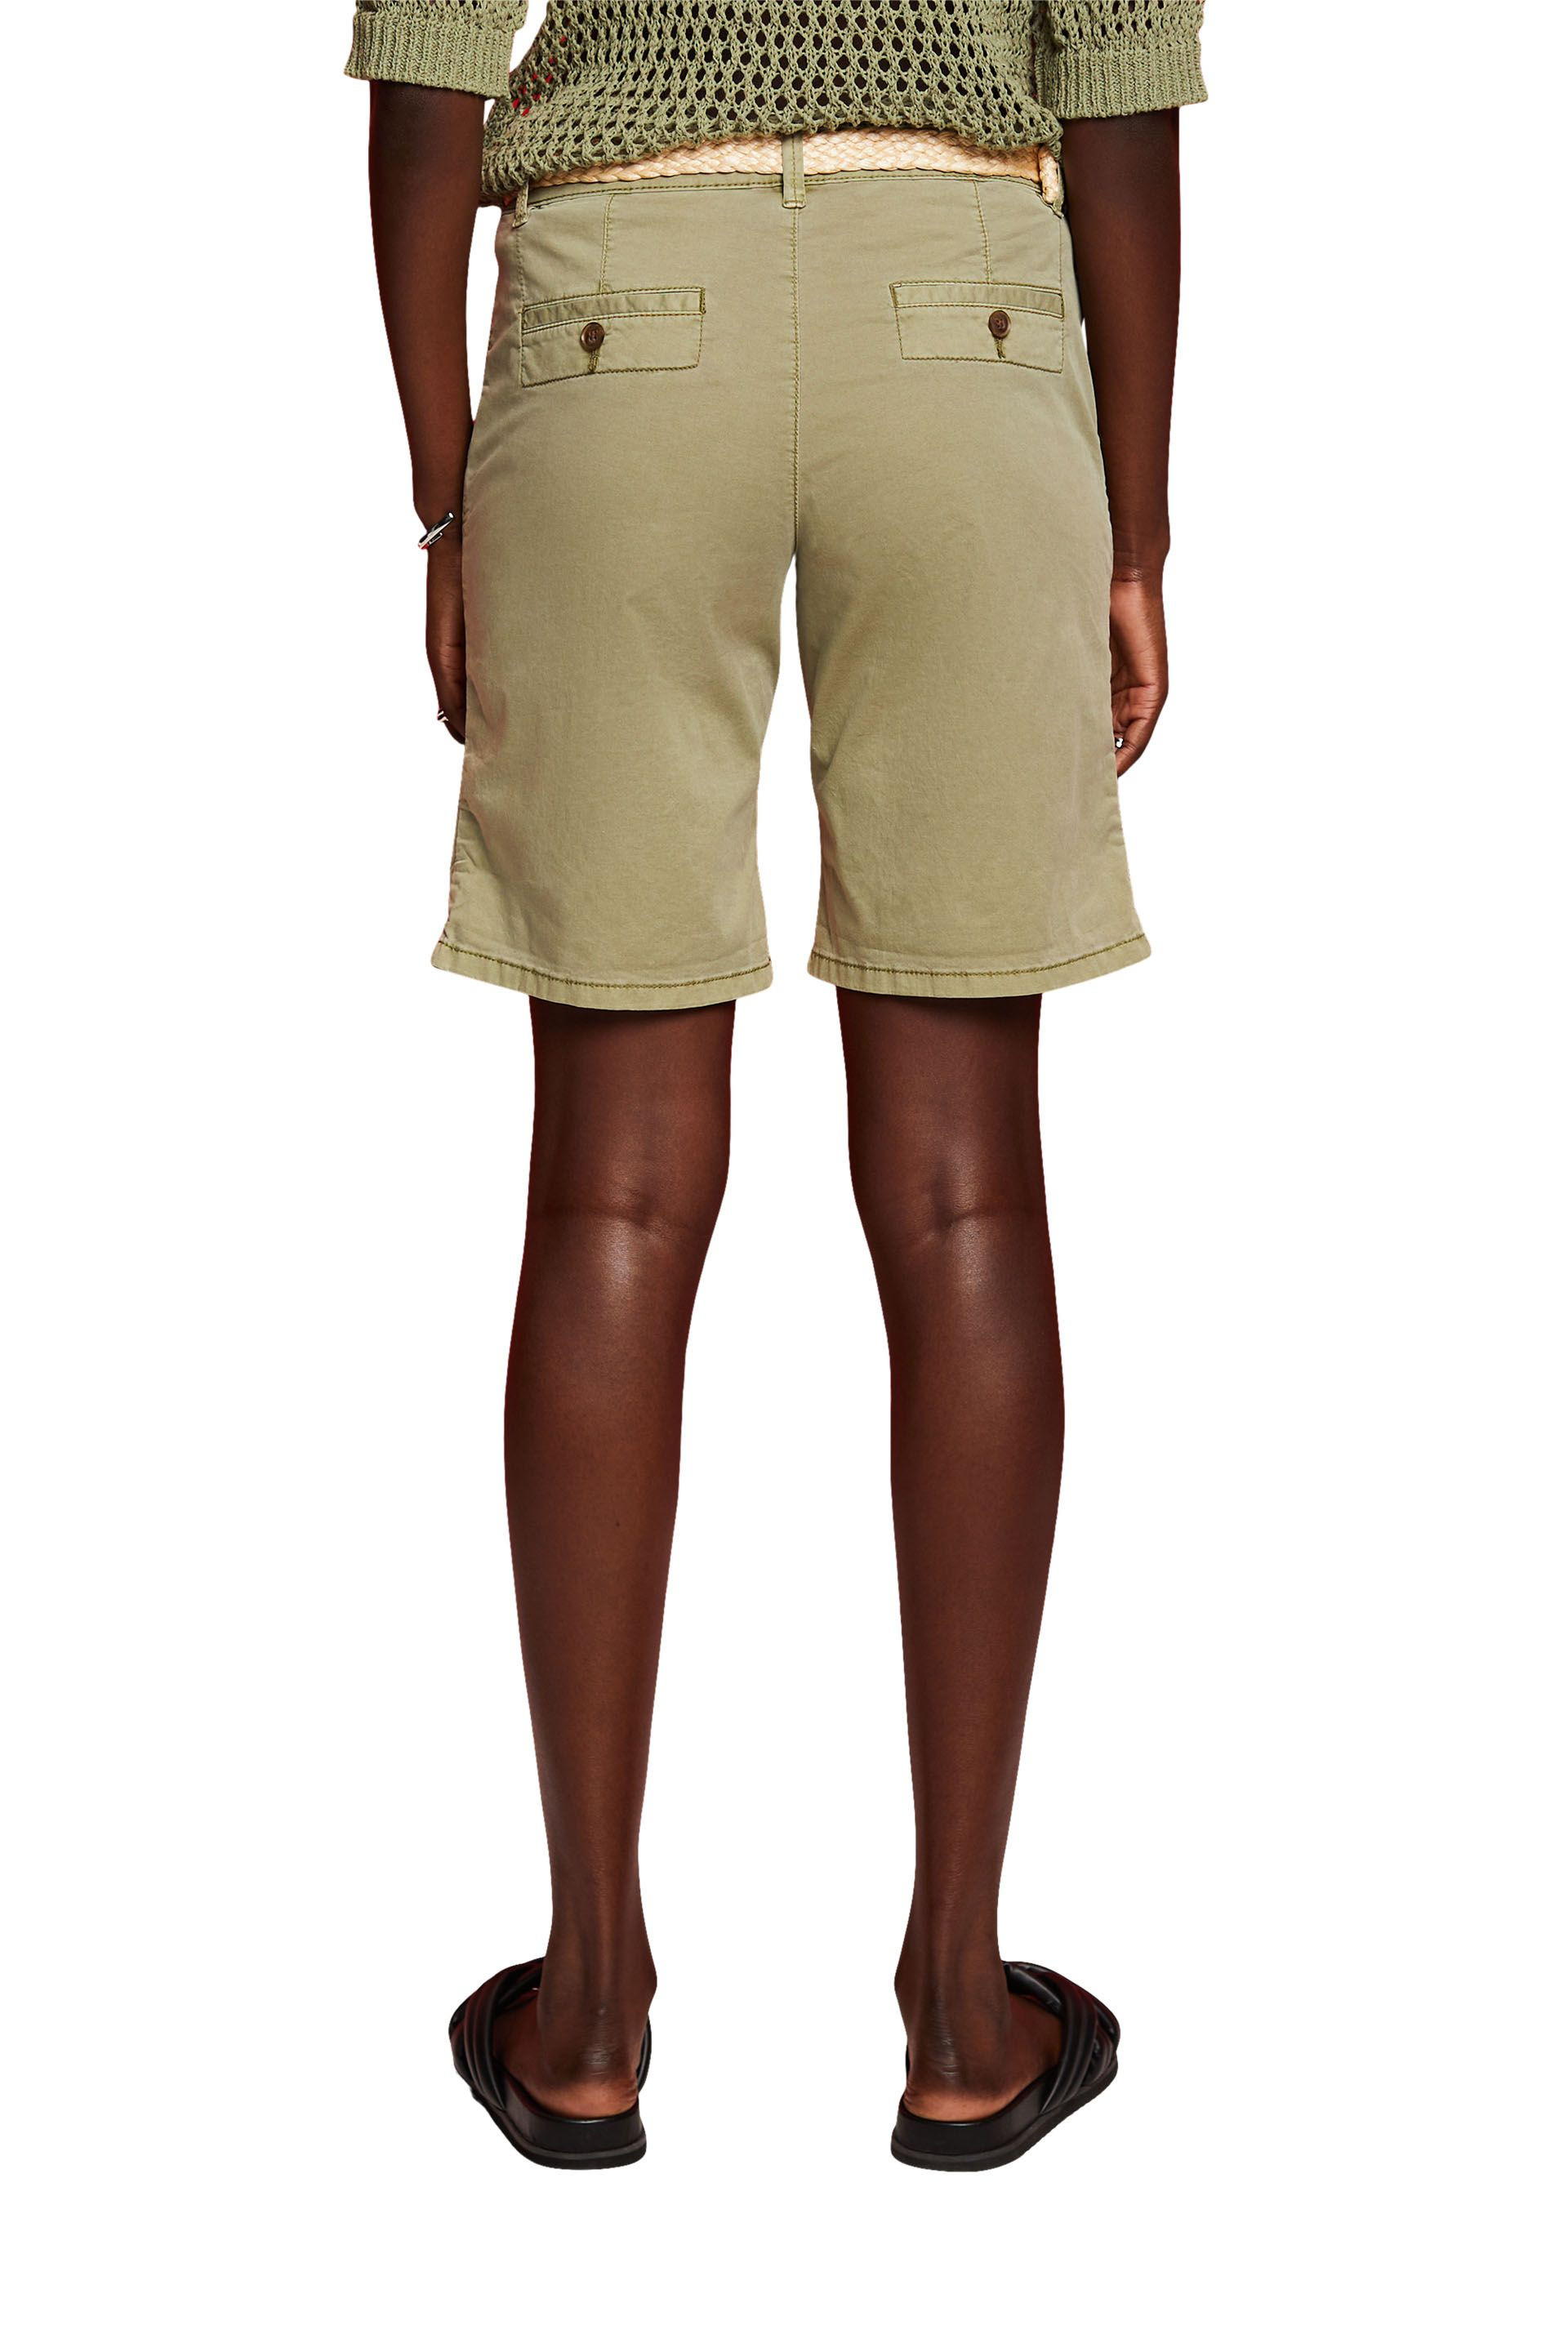 Esprit - Shorts con cintura intrecciata in rafia, Verde, large image number 2